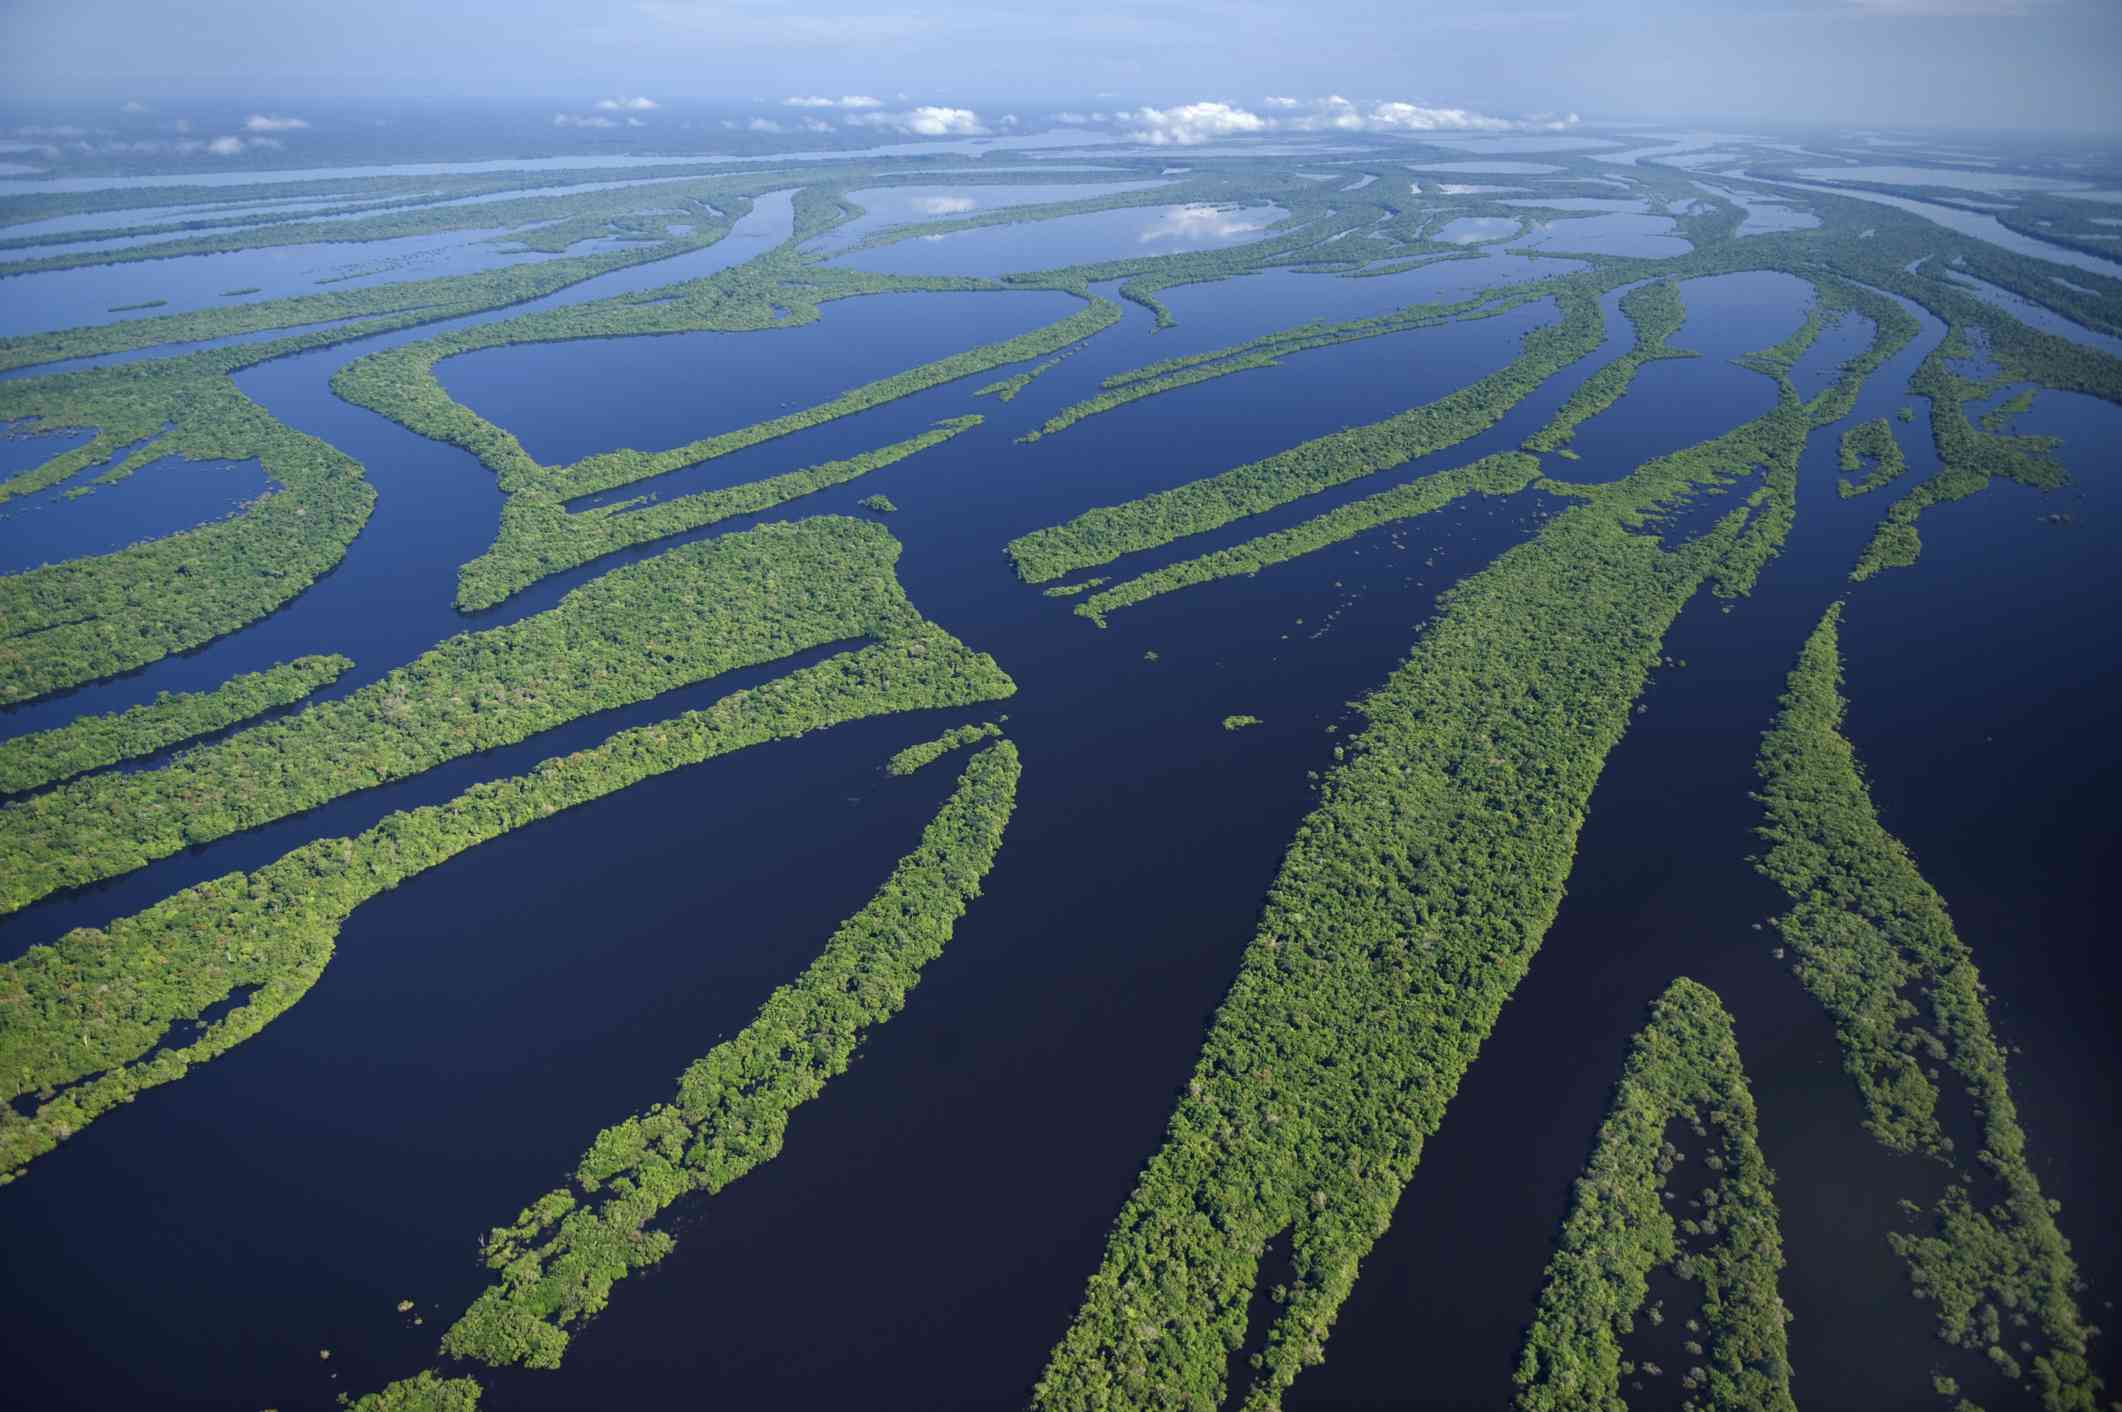 река амазонка в бразилии